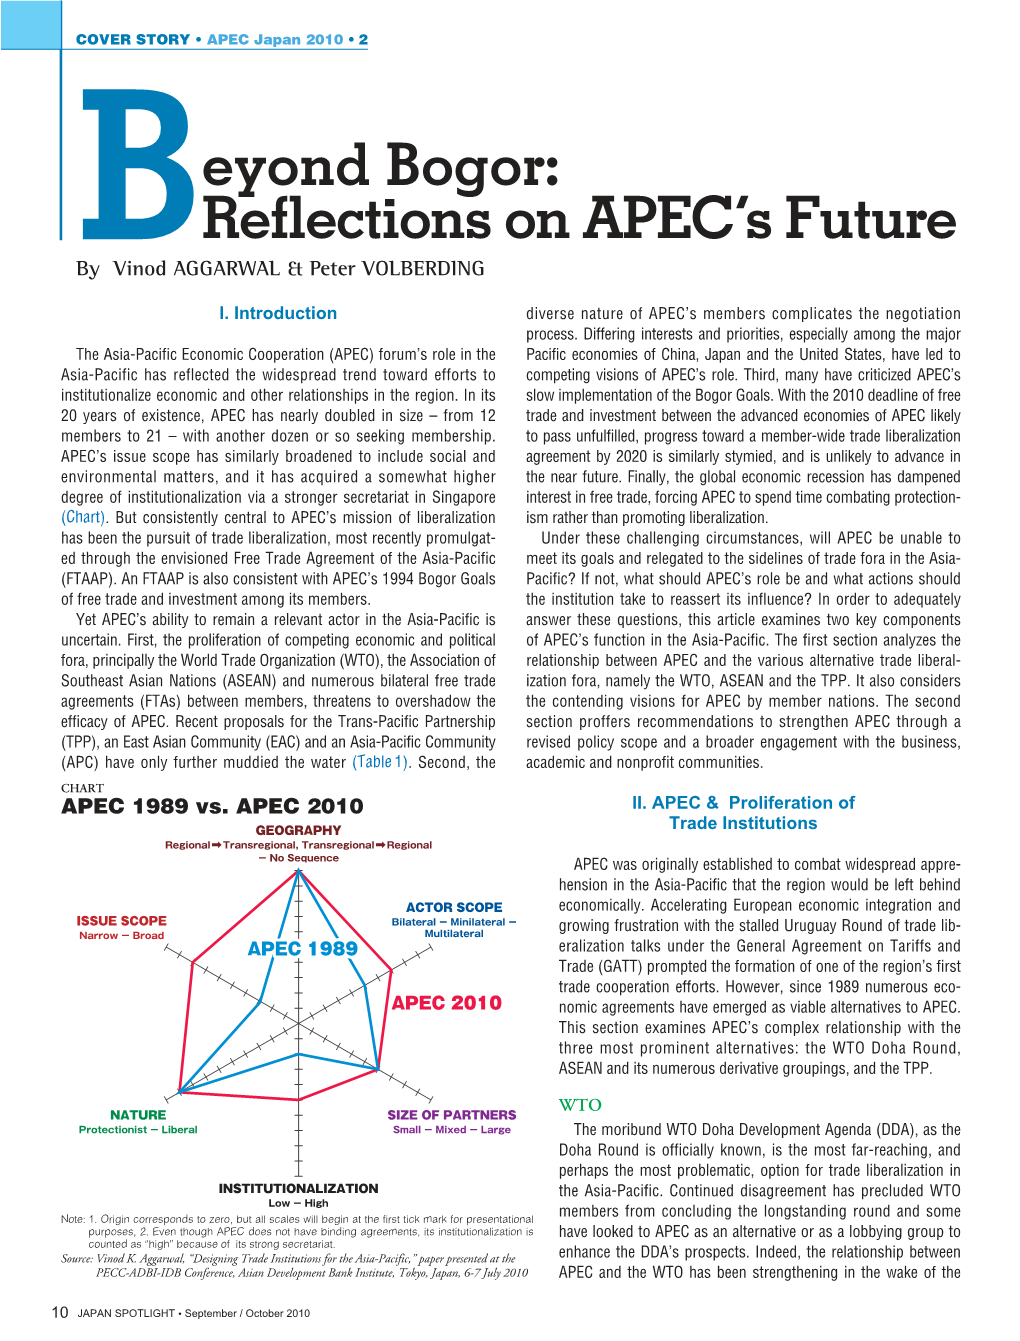 Beyond Bogor: Reflections on APEC's Future